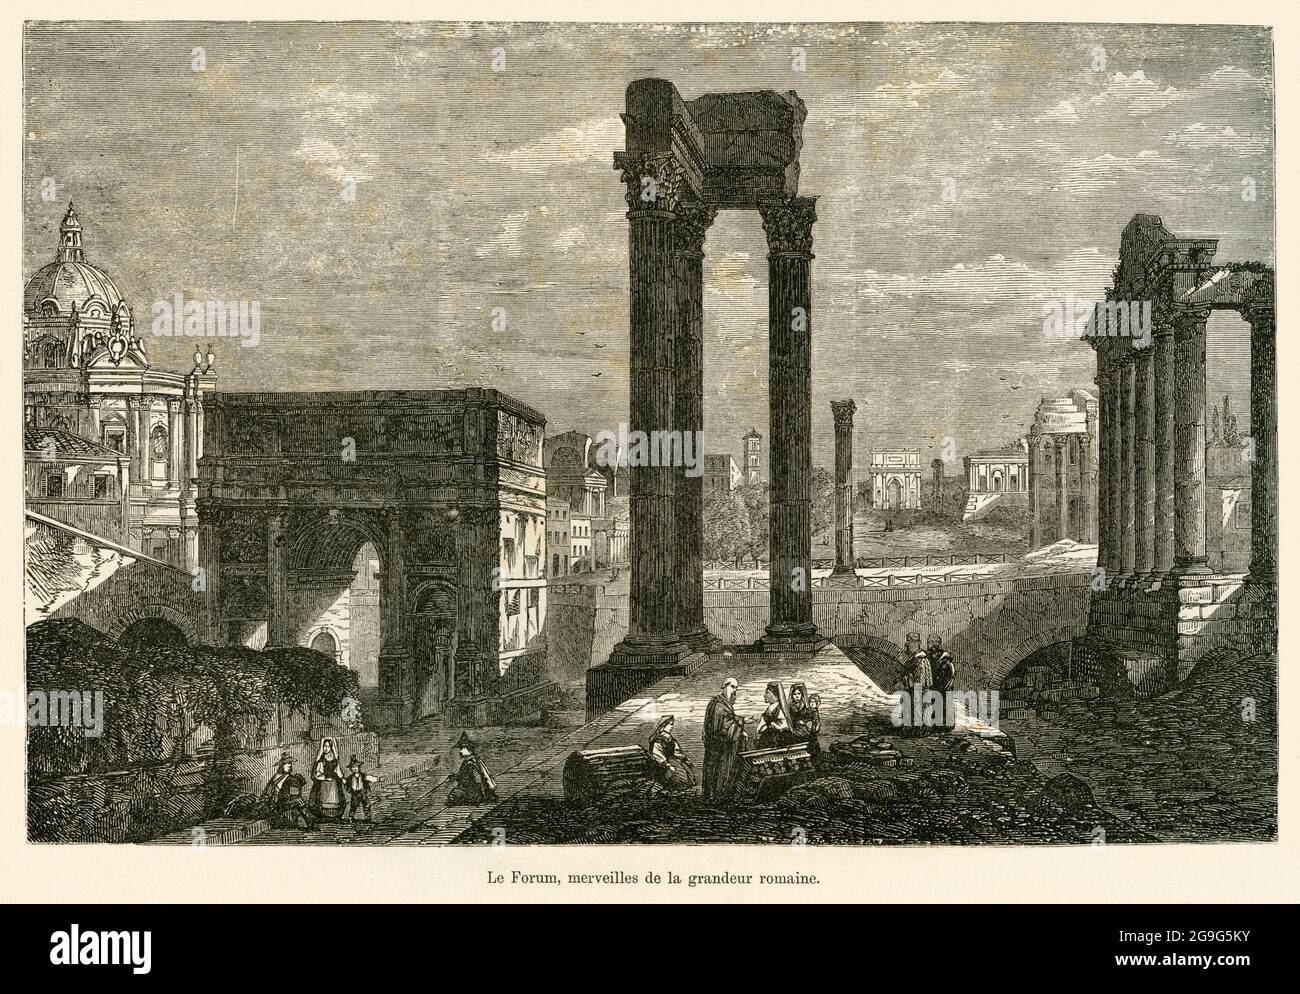 geography / travel, Italy, Lazio, Rome, original text: 'Le Forum, merveilles de la grandeur romaine', ADDITIONAL-RIGHTS-CLEARANCE-INFO-NOT-AVAILABLE Stock Photo